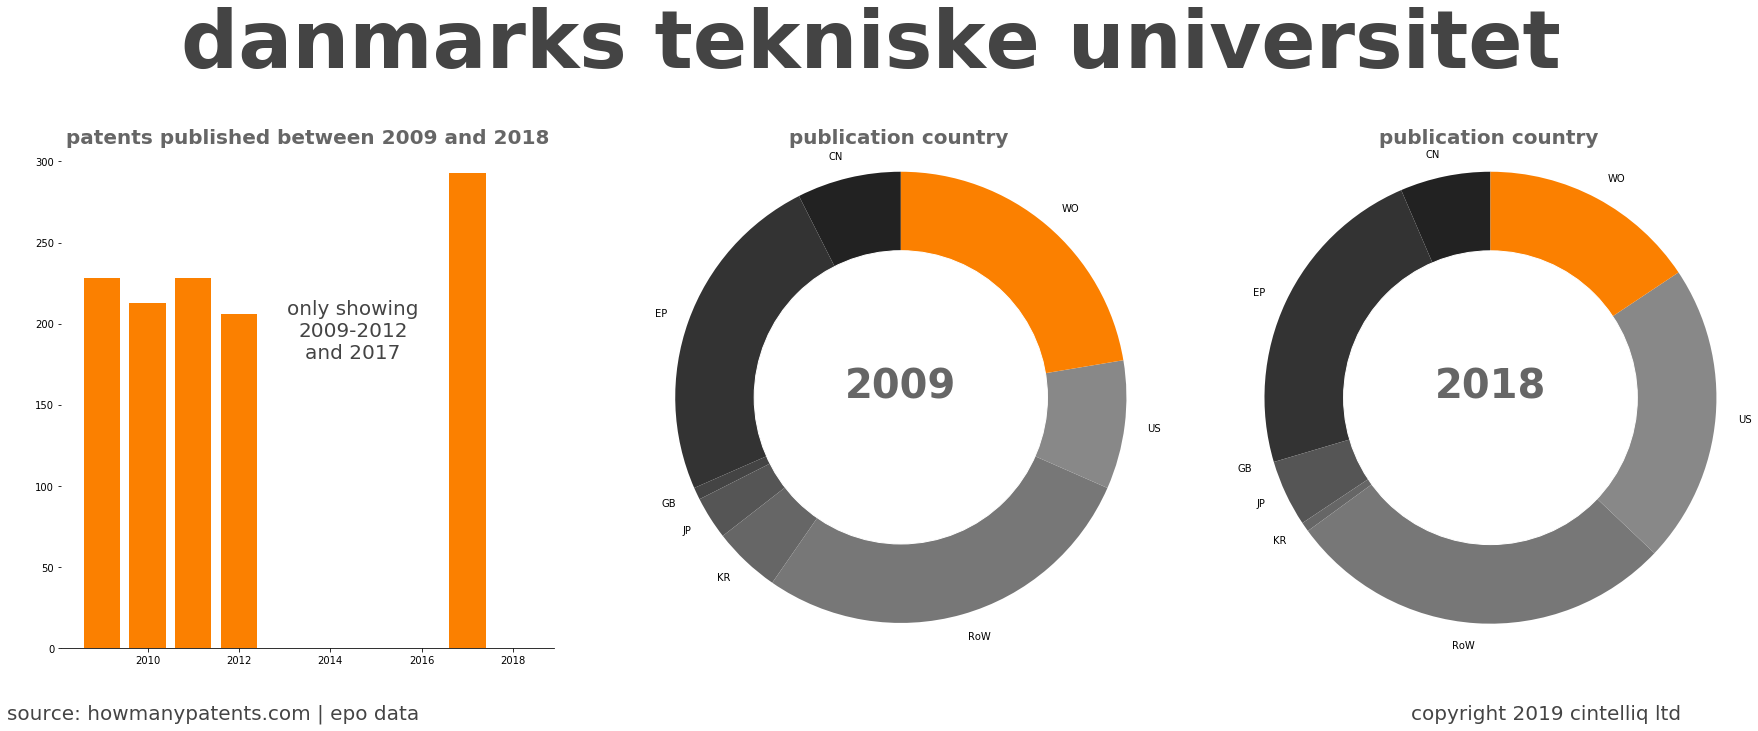 summary of patents for Danmarks Tekniske Universitet